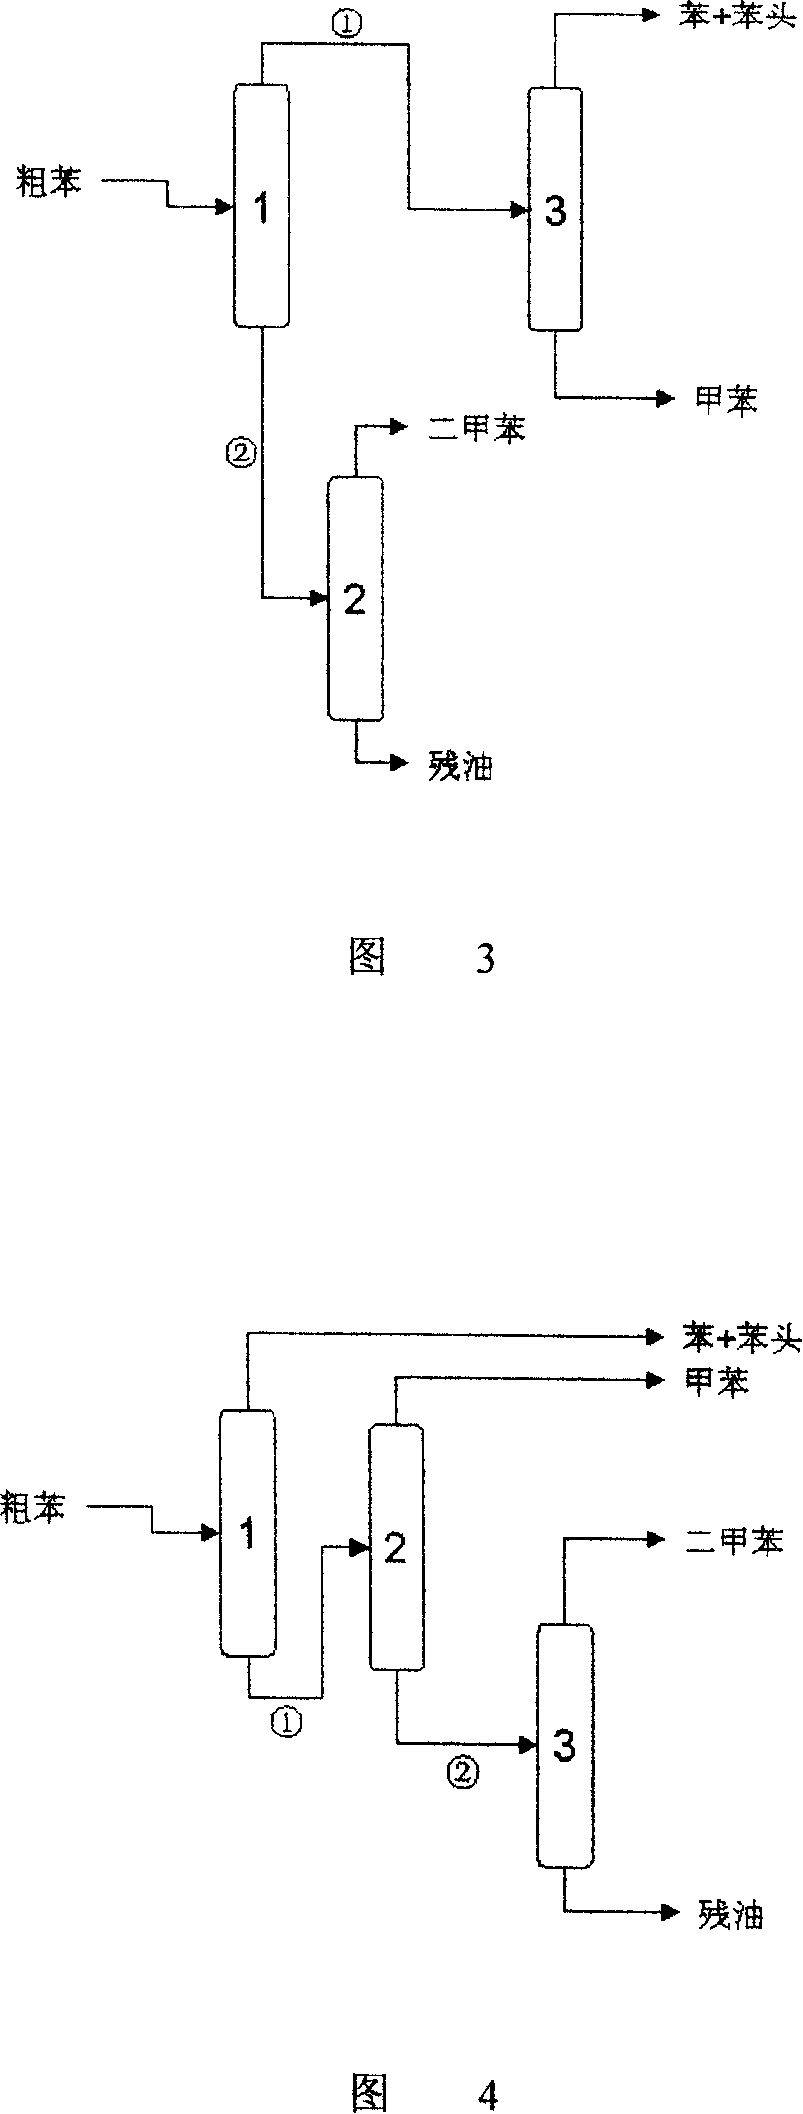 Method for refining carbonization crude benzole